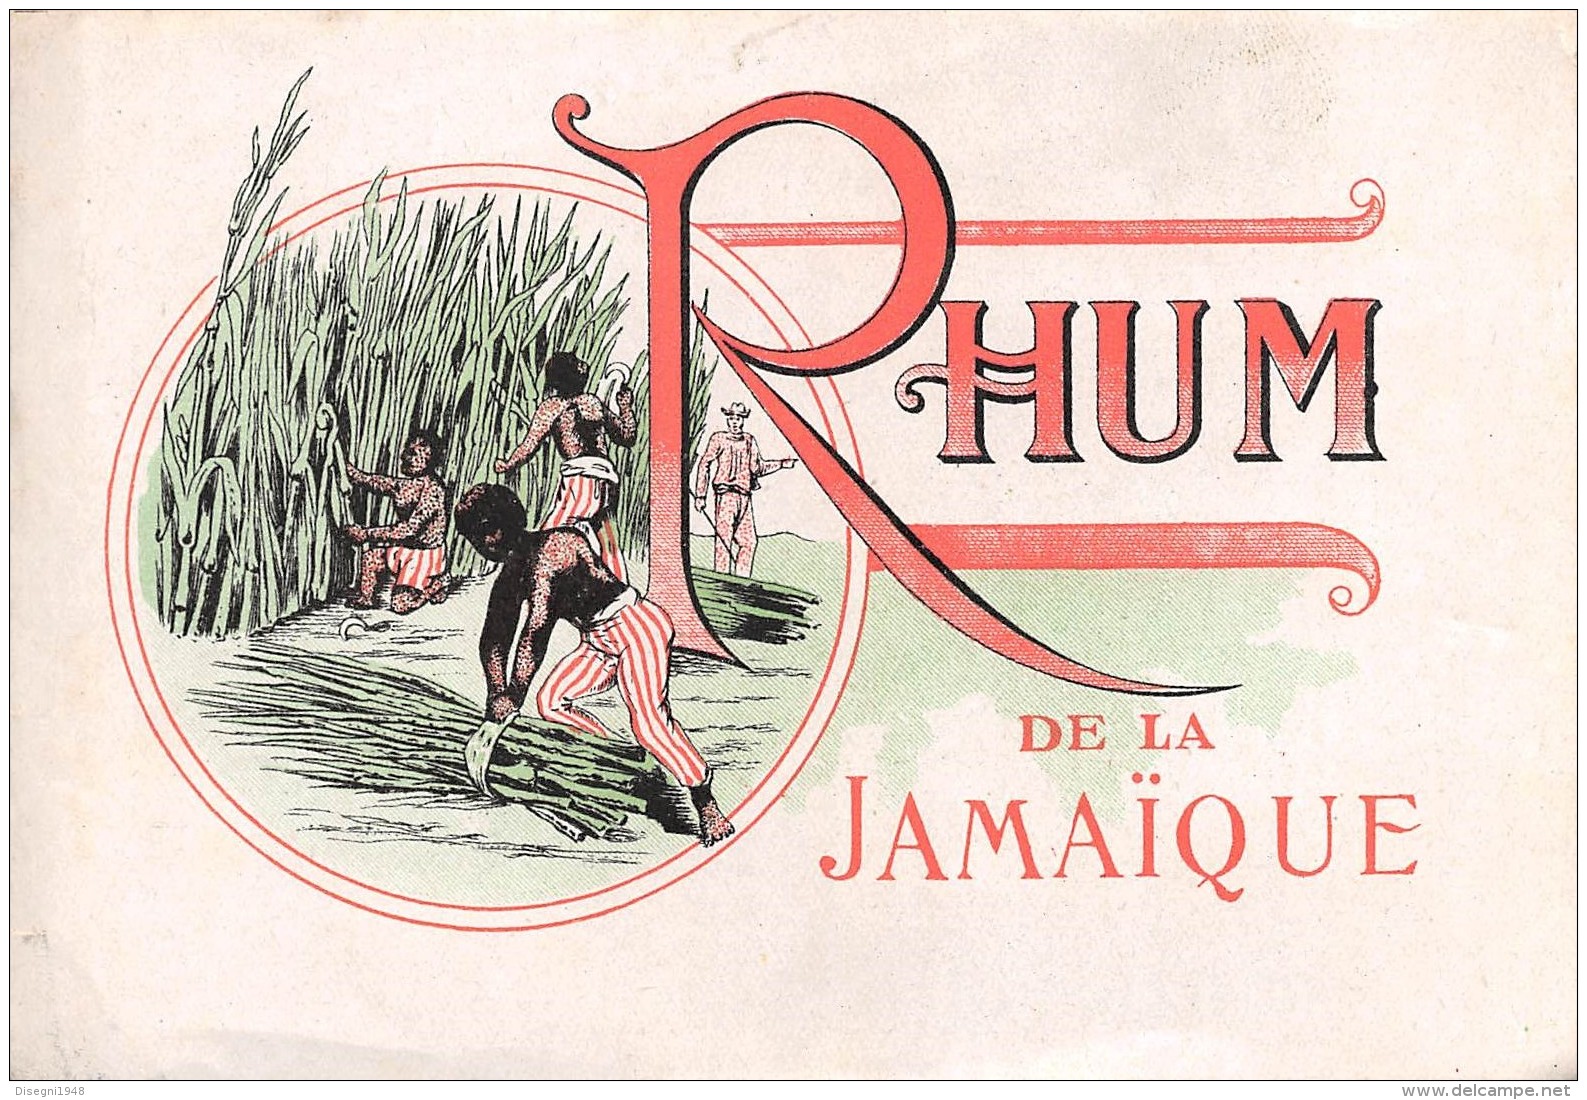 06283 "RHUM DE LA JAMAIQUE" ETICH. ORIG. - ORIG. LABEL - Rhum